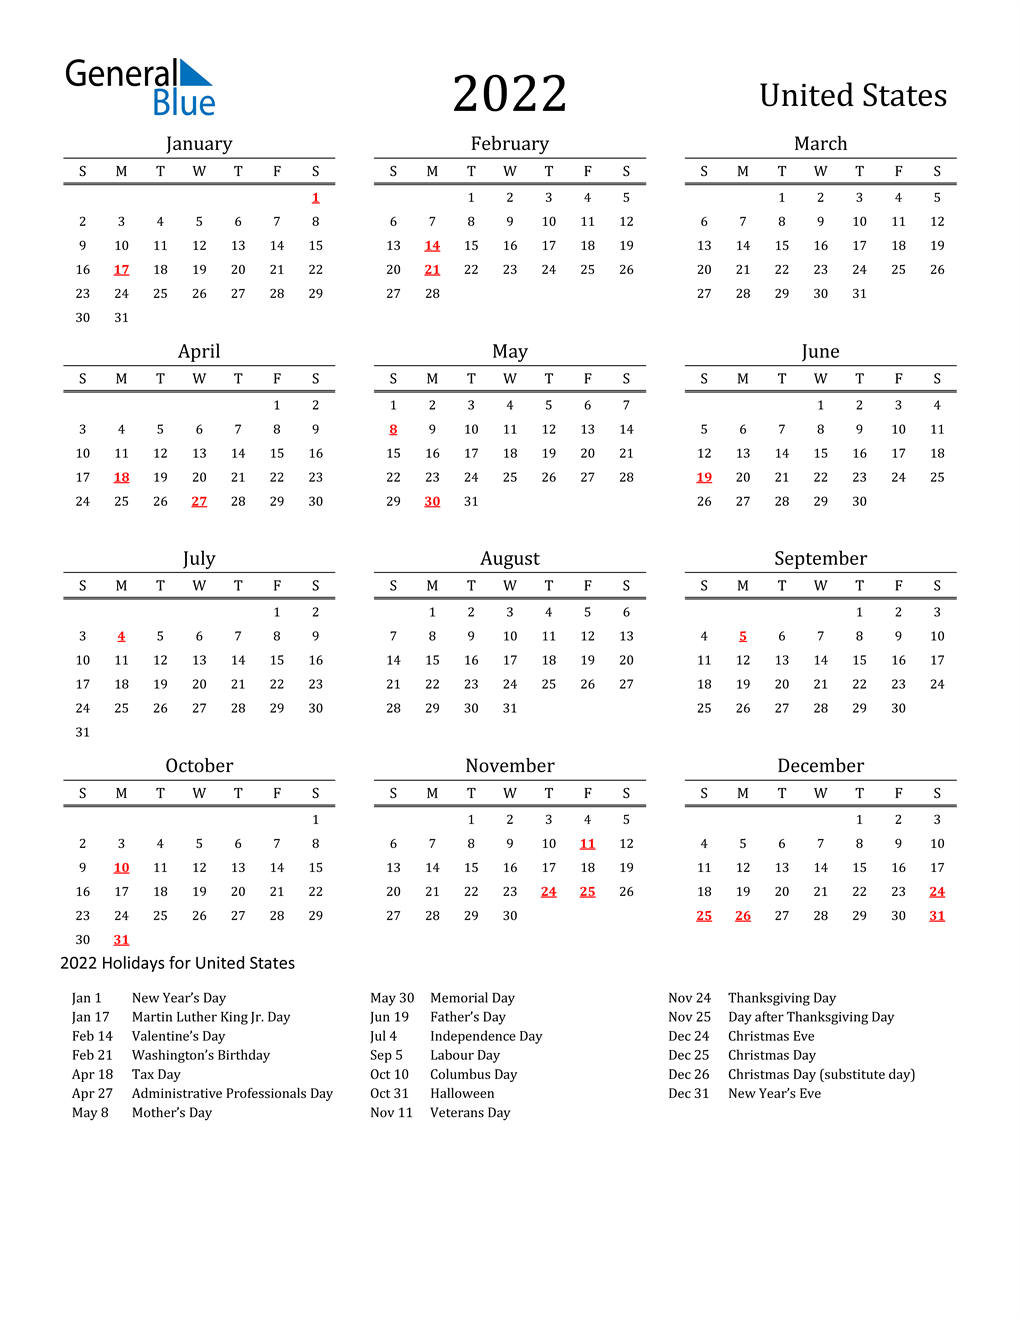 Northrop Grumman Holiday Calendar 2022 2022 United States Calendar With Holidays